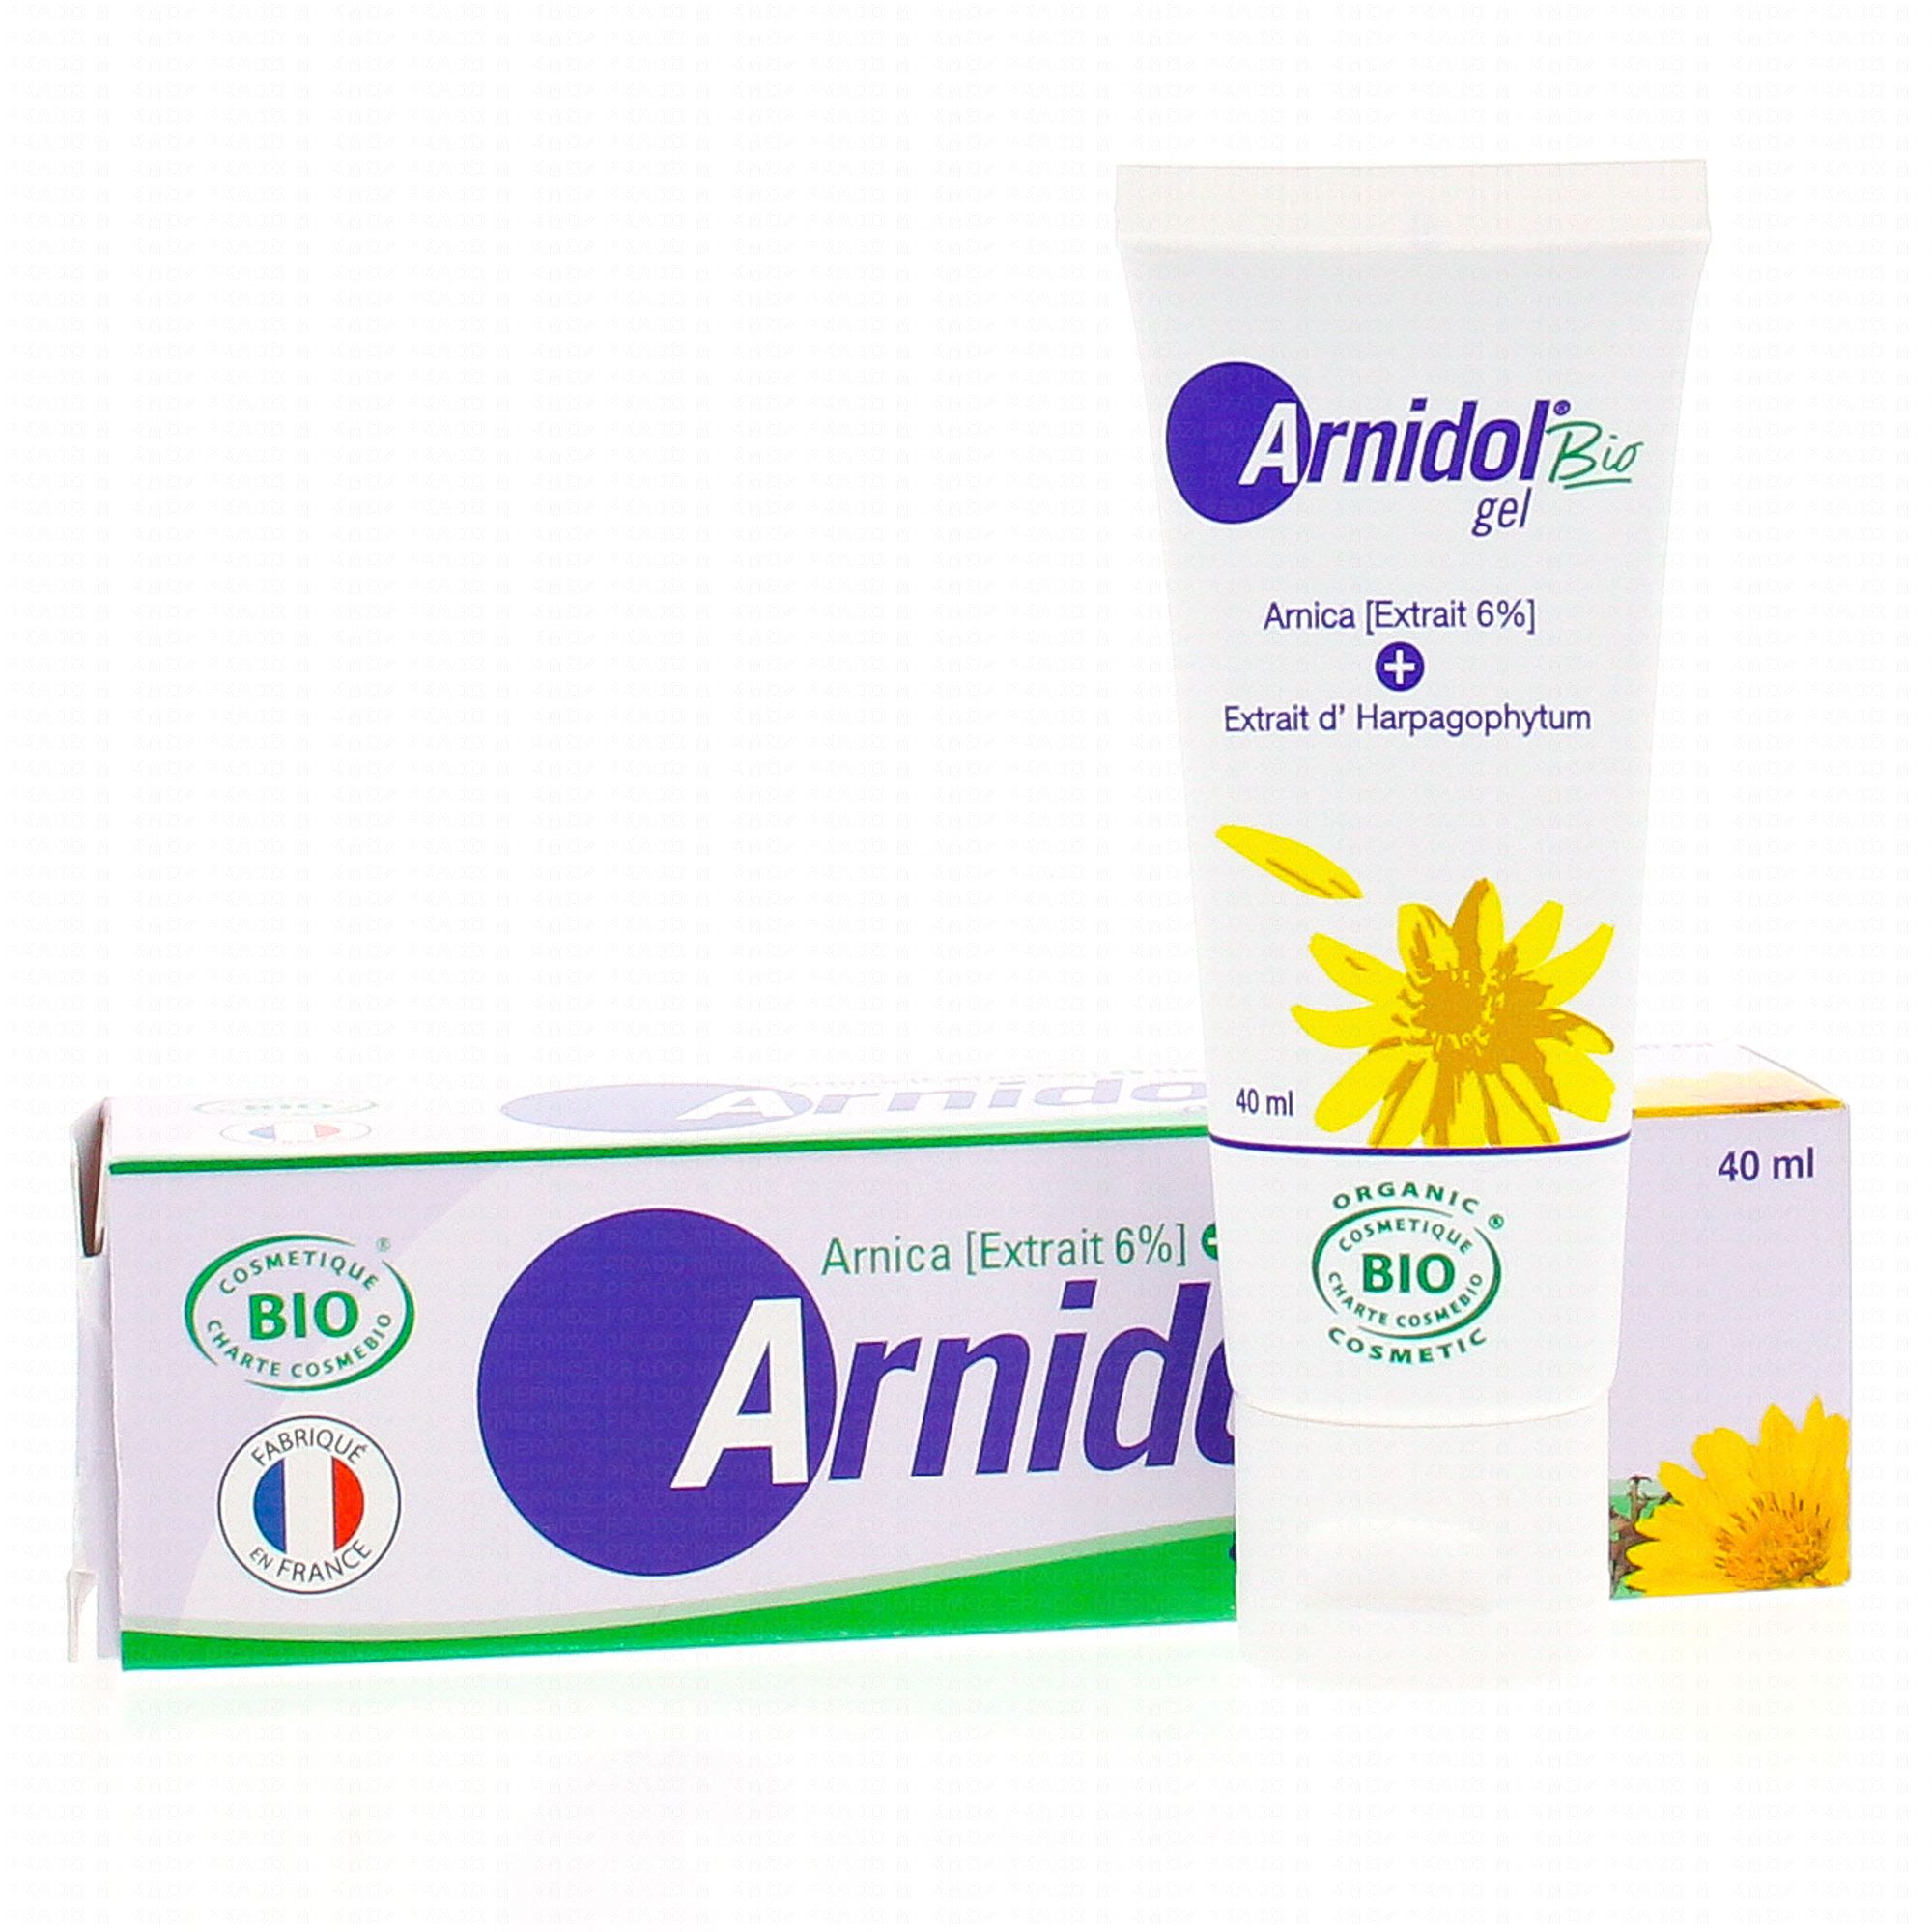 ARNIDOL Bio gel tube 40ml - Pharmacie Prado Mermoz